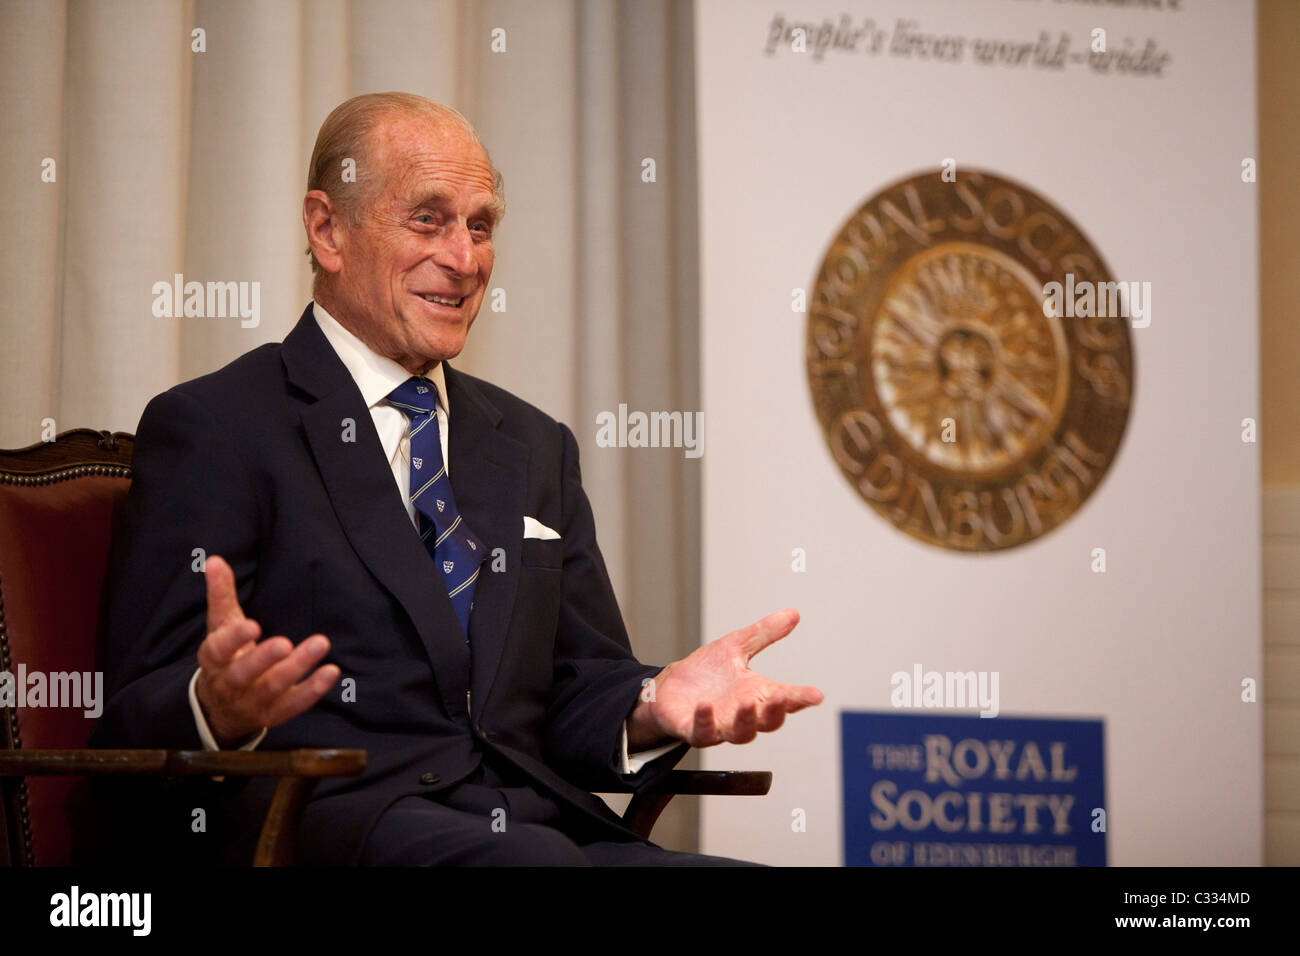 HRH The Duke of Edinburgh at The Royal Society of Edinburgh to present Royal Medals Stock Photo